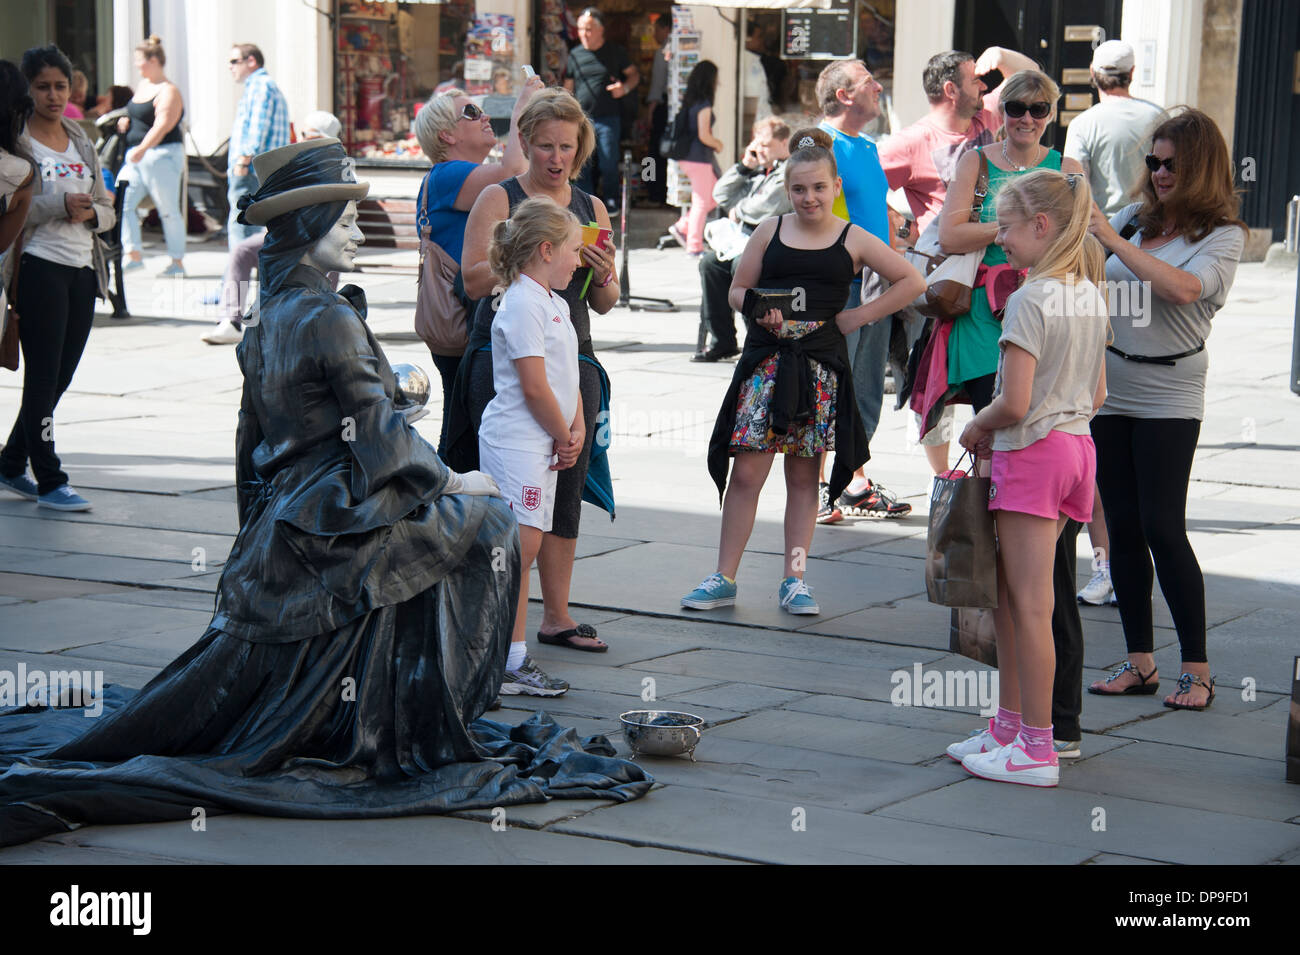 Street Statue Entertainer Entertaining Children Stock Photo